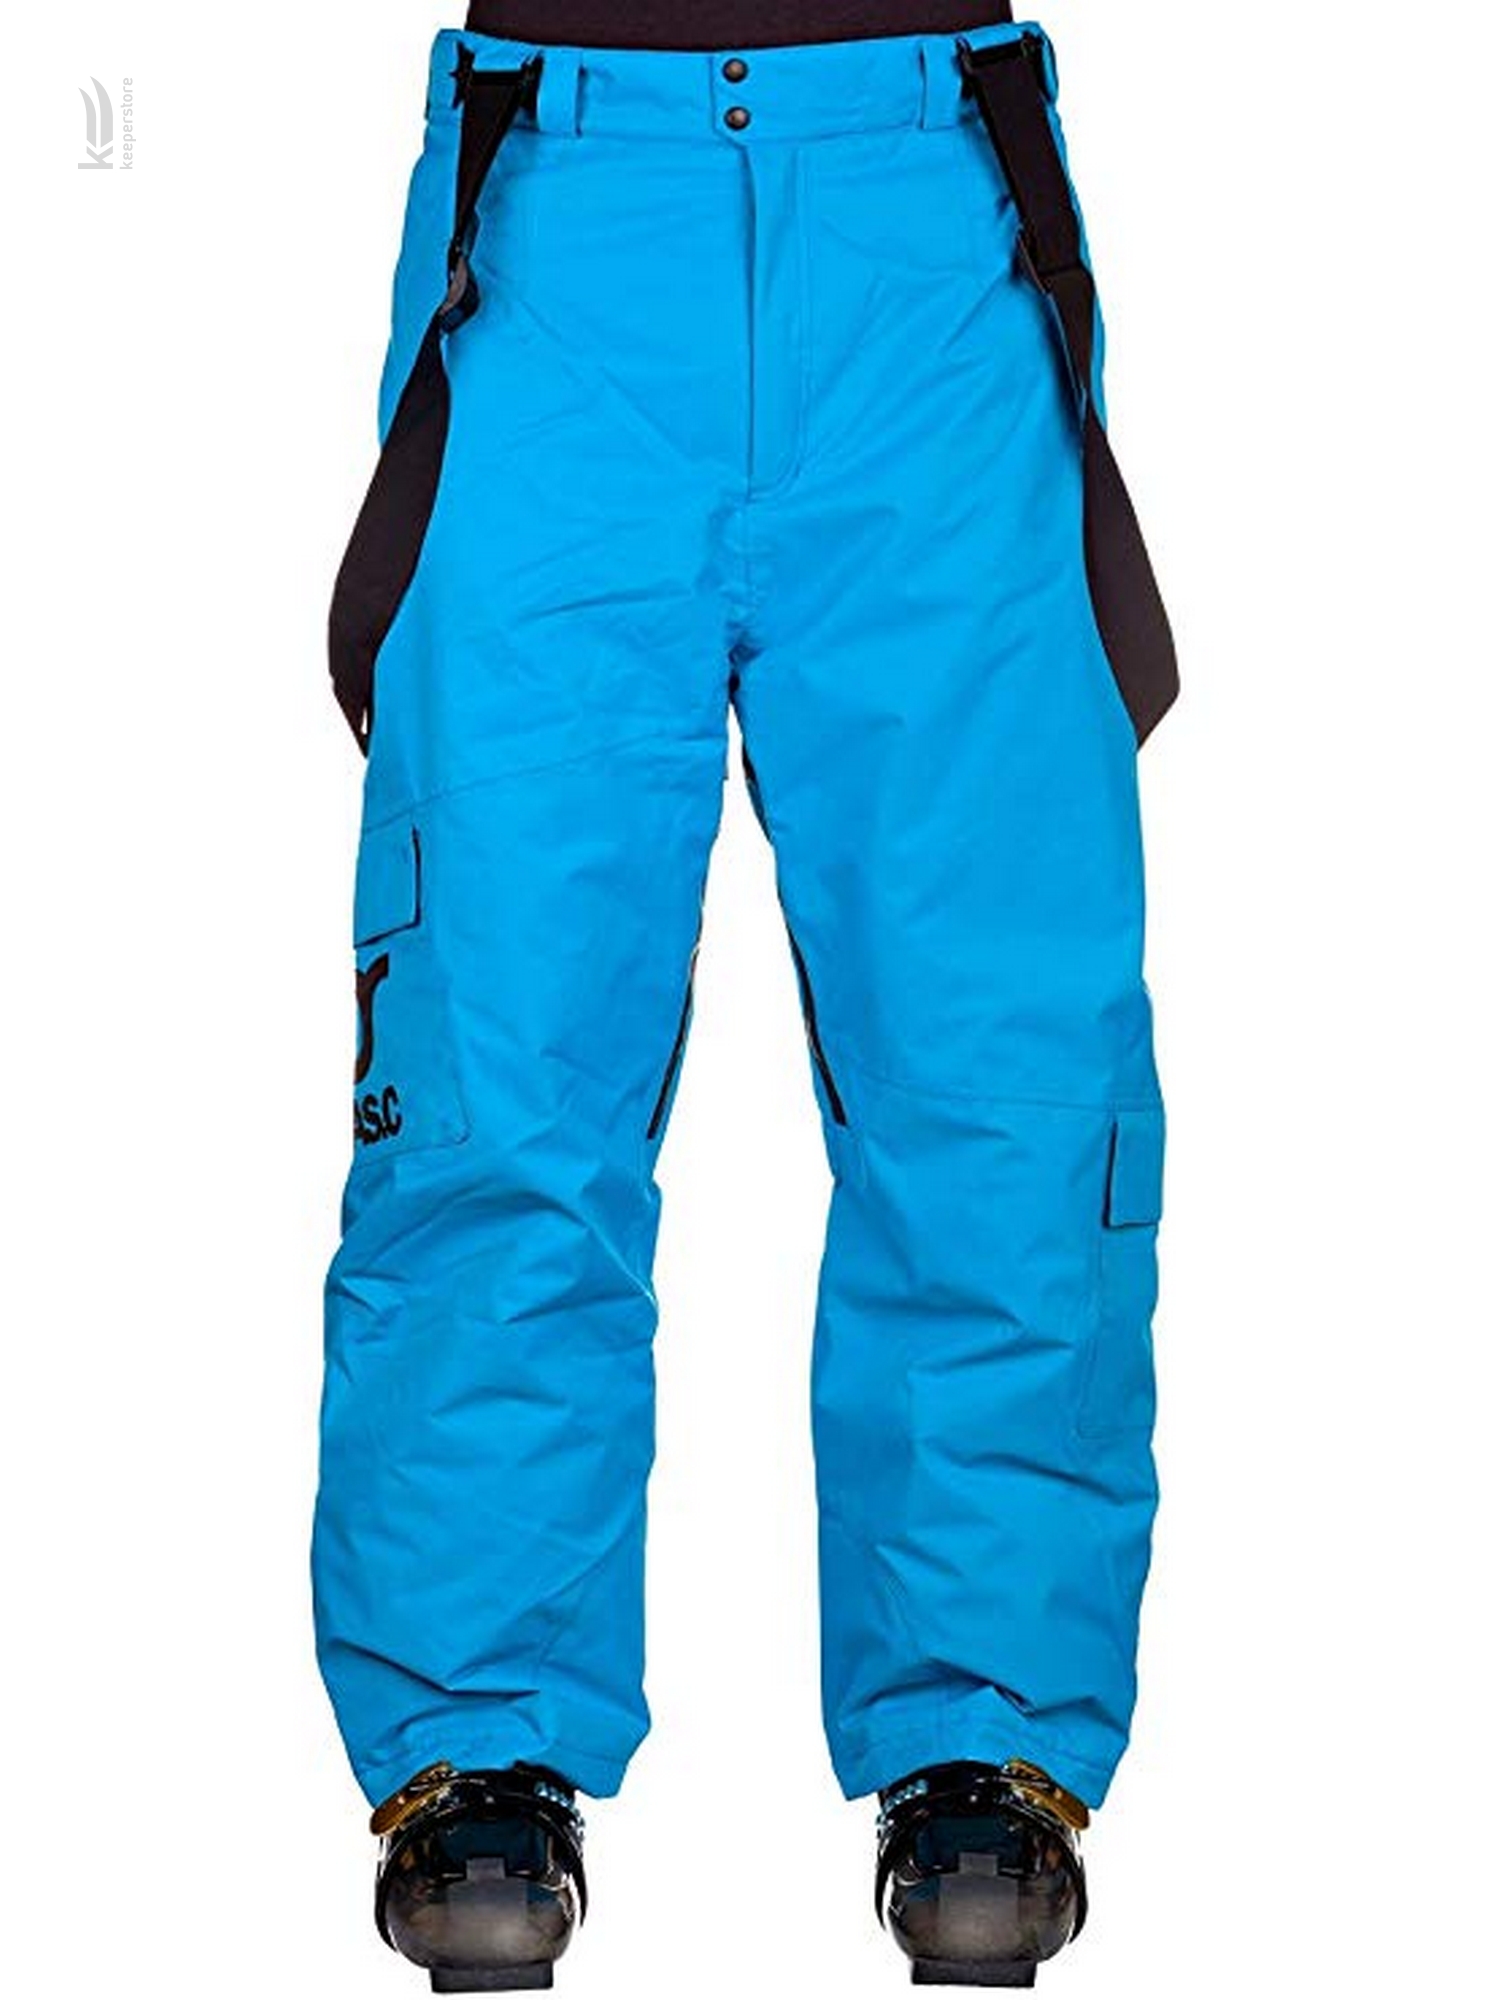 Мужские сноубордические штаны Fasc Monarch Blue Pants (M)